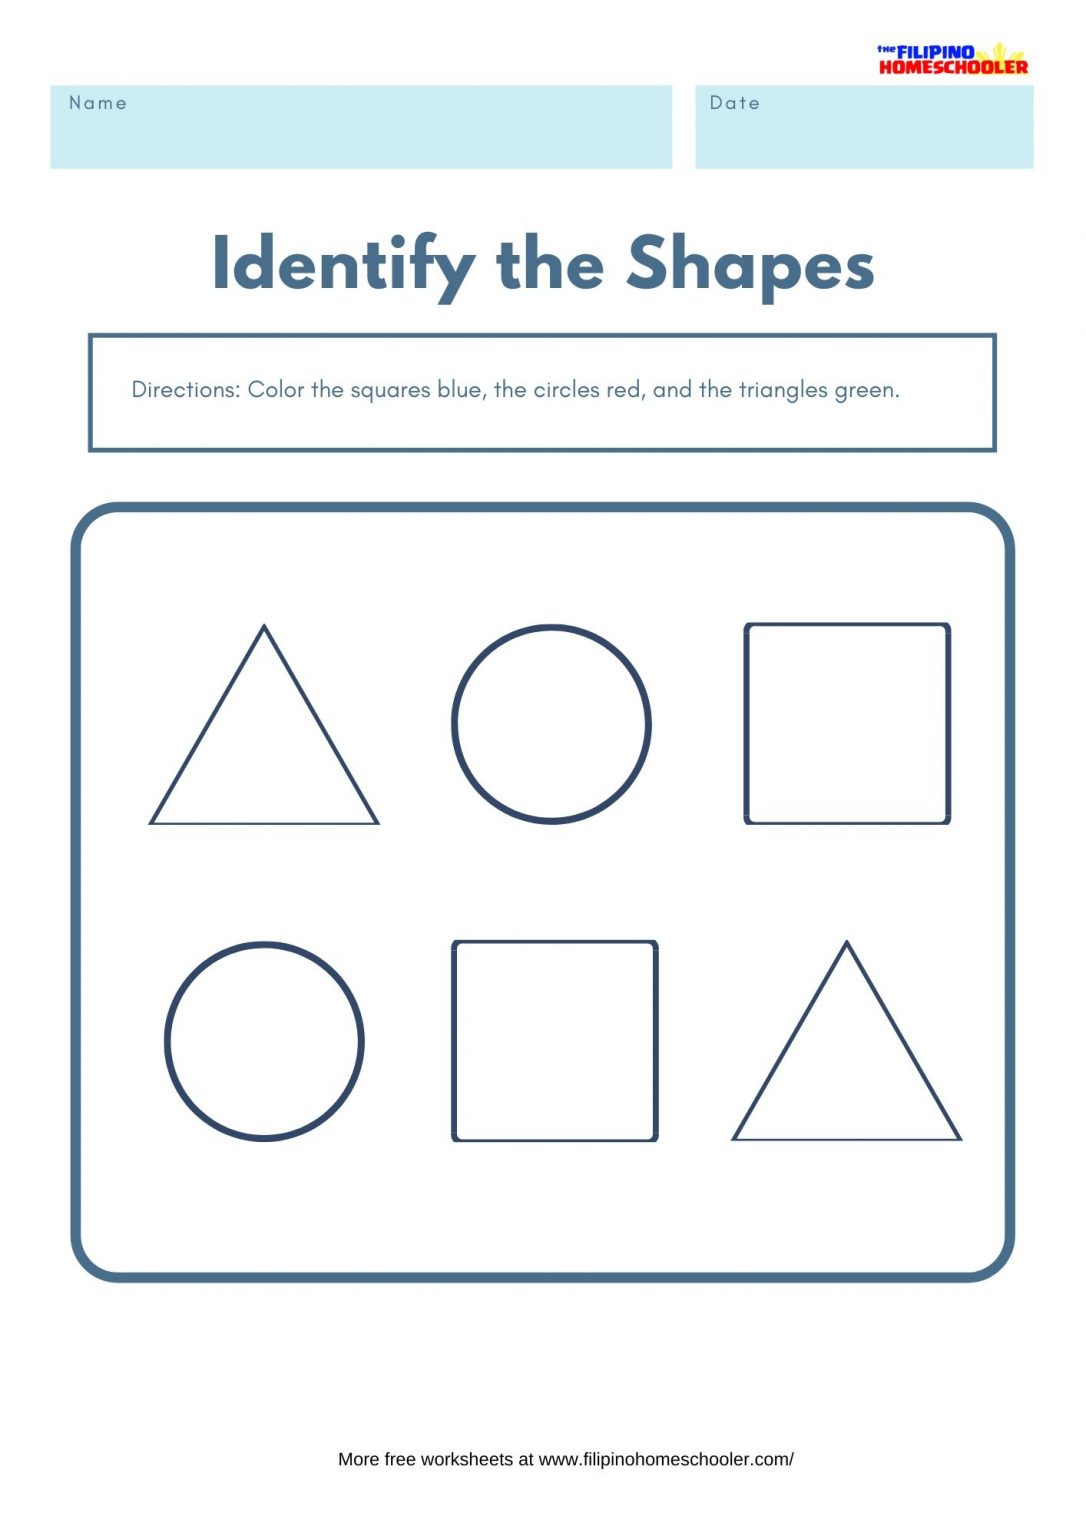 Color the Shape Math Worksheet — The Filipino Homeschooler